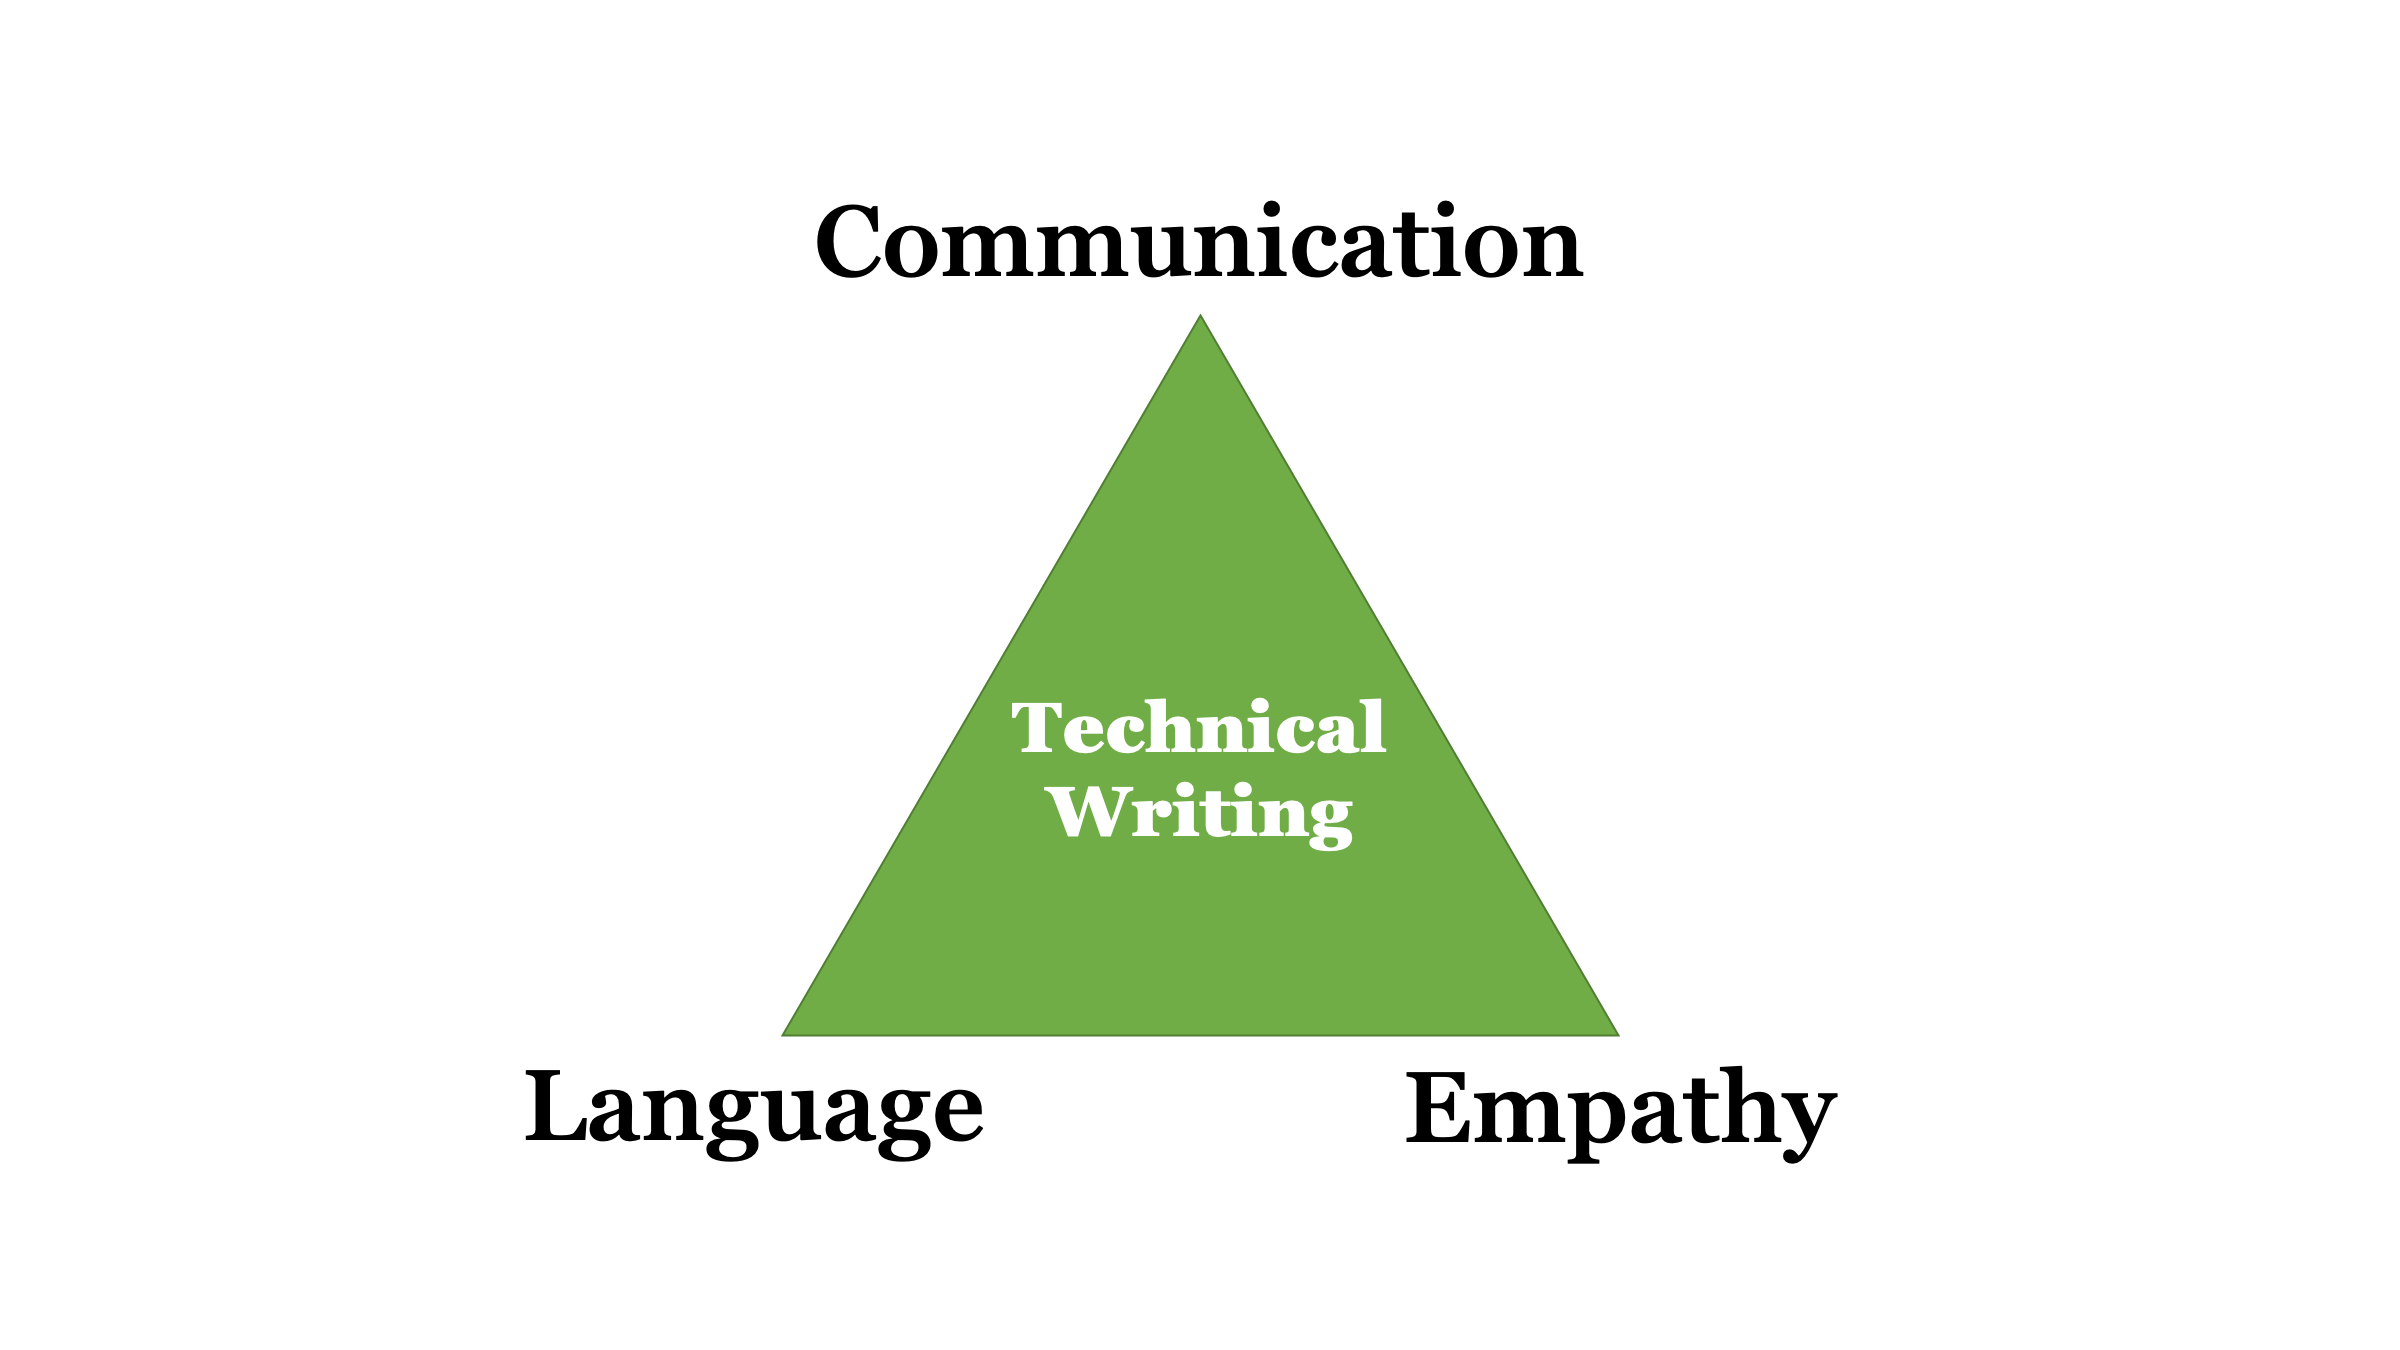 Image tech writing triangle